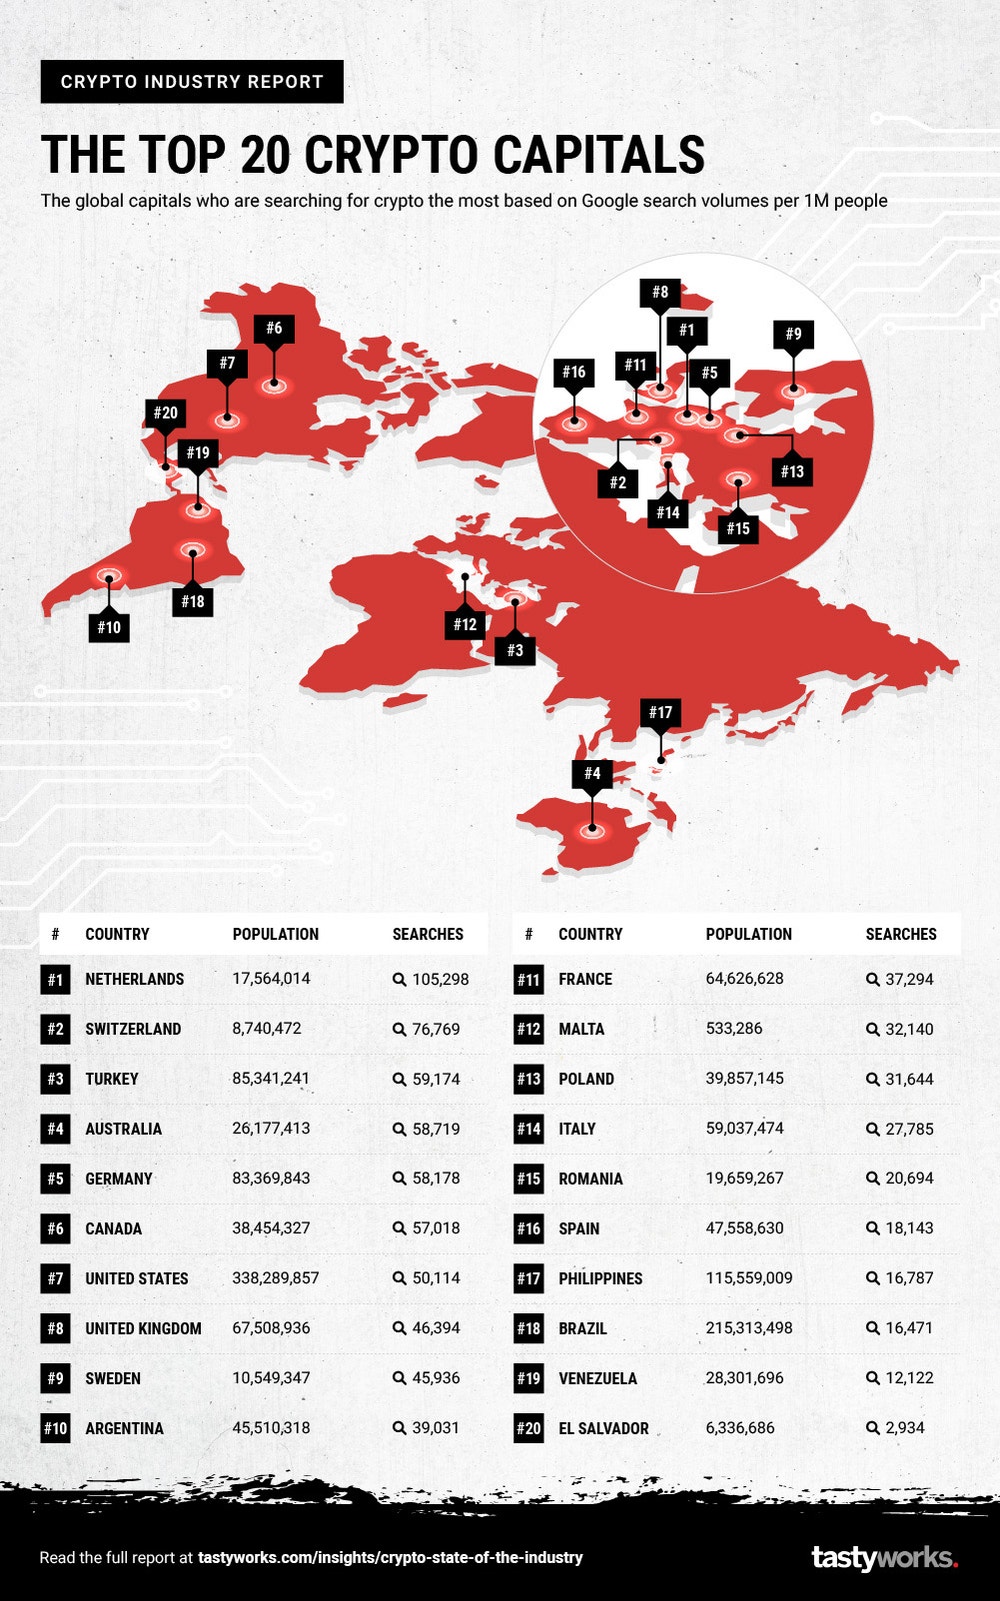 Top 20 Crypto Capitals Worldwide